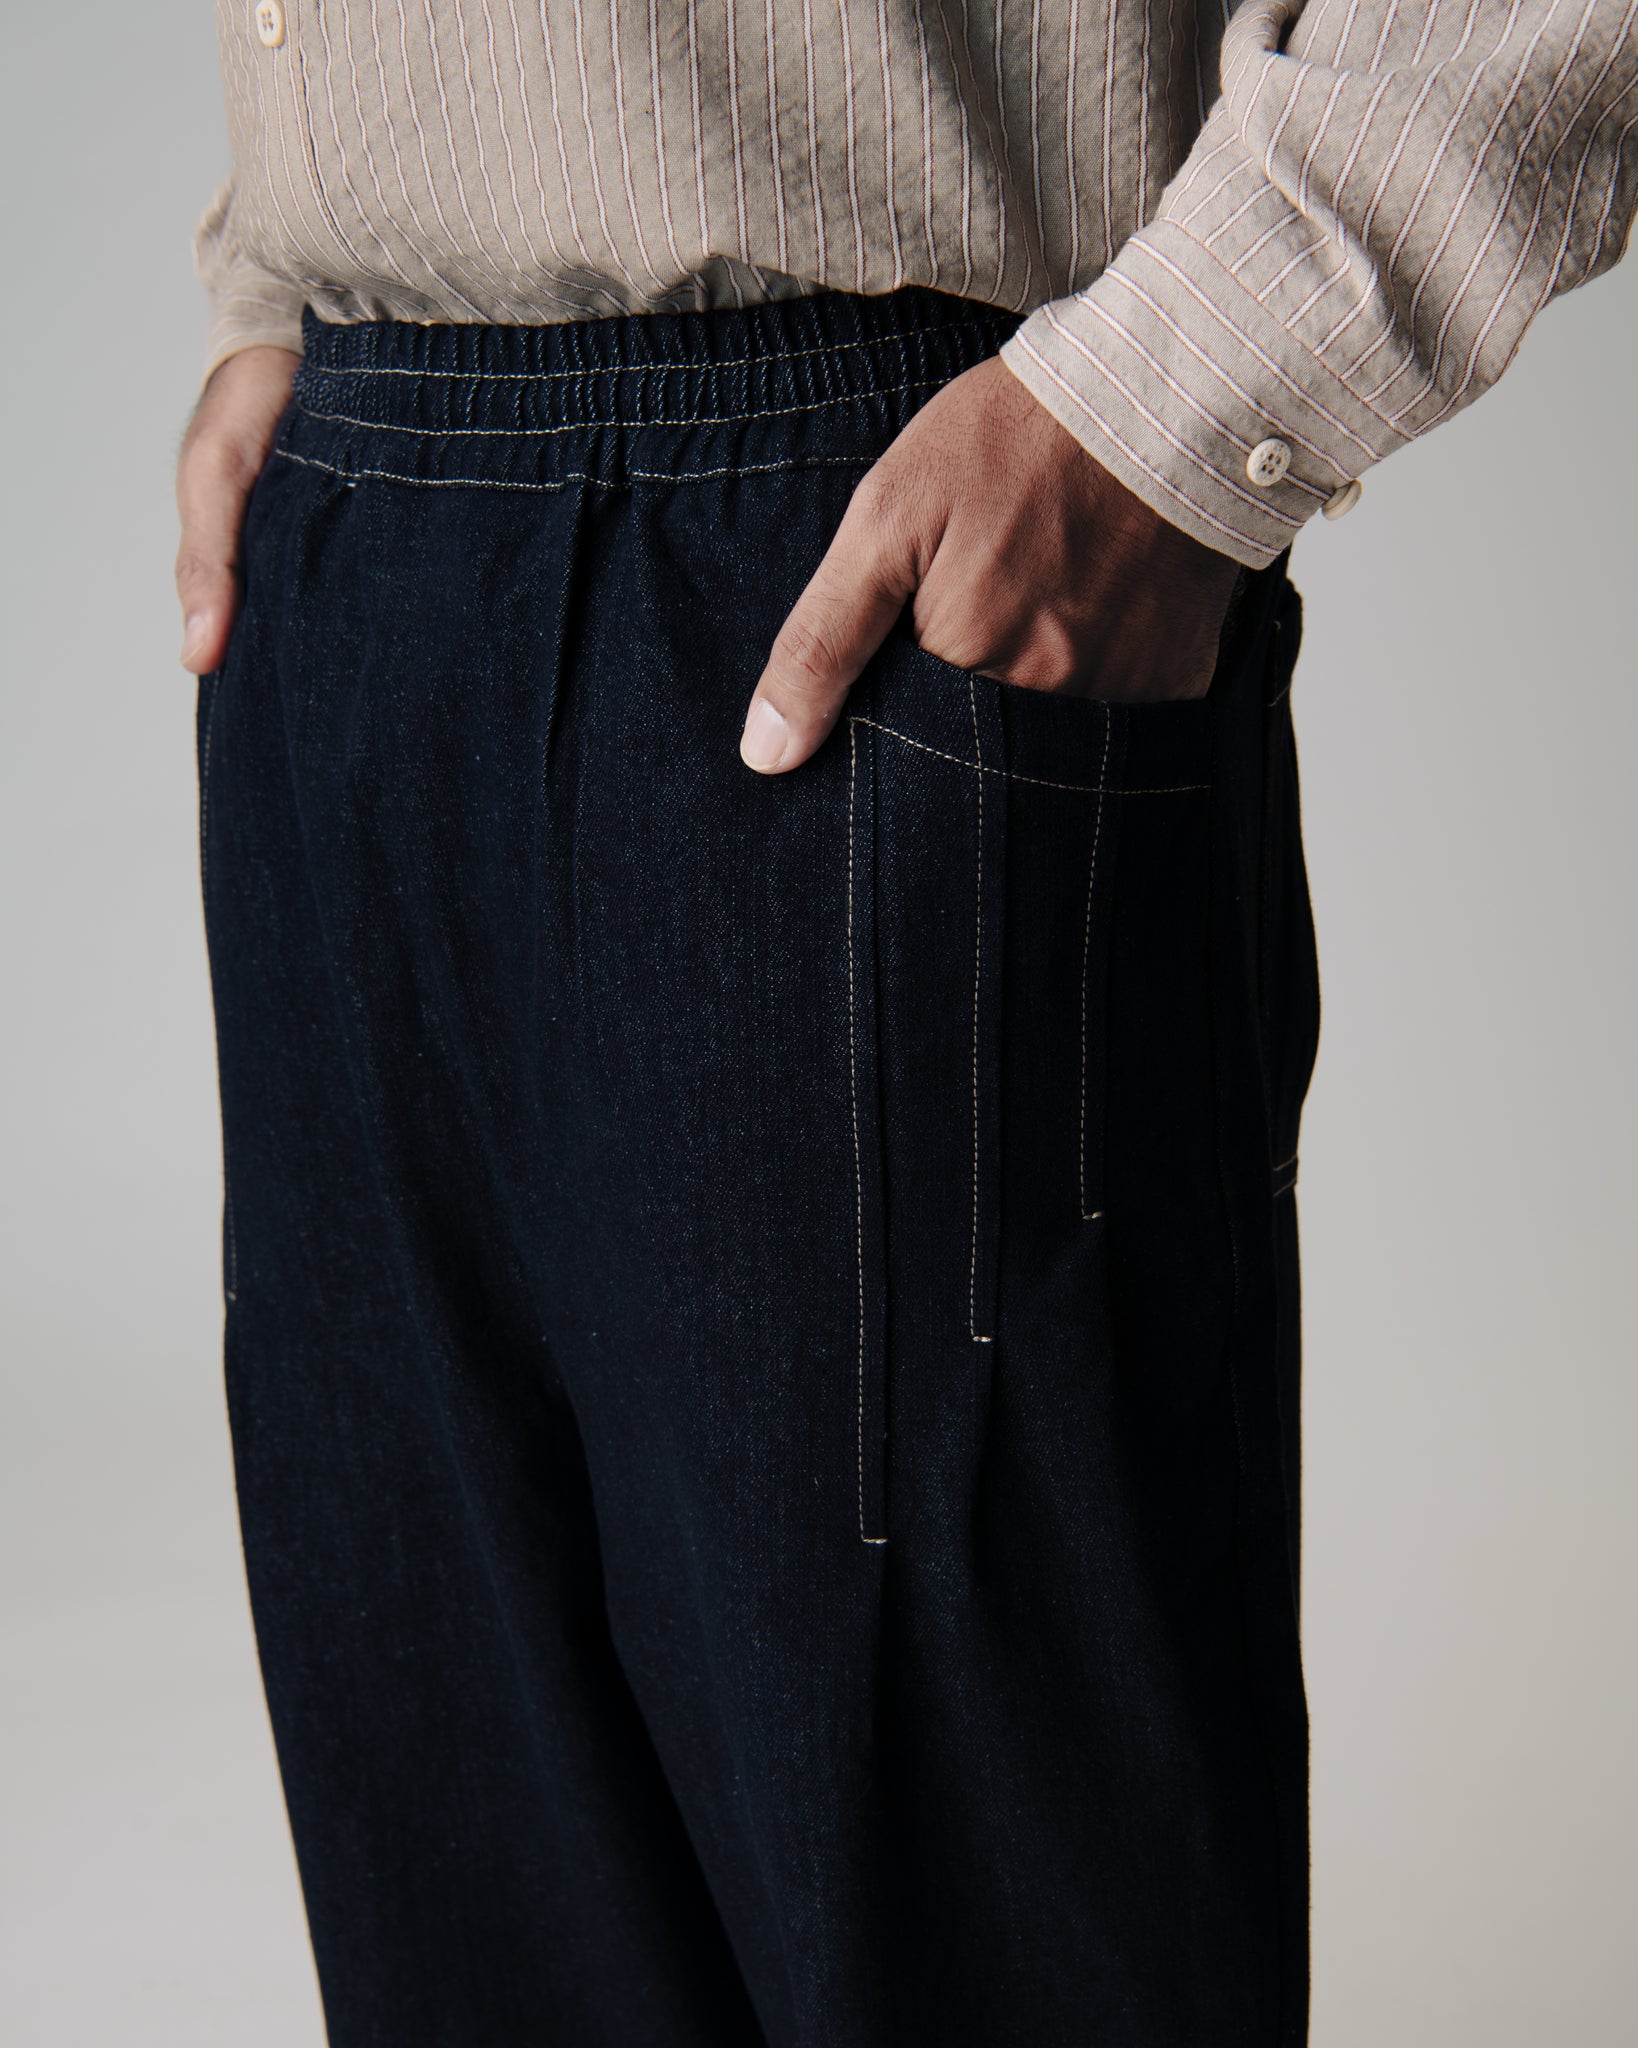 Unisex: The Loose Pants (Khaki) –